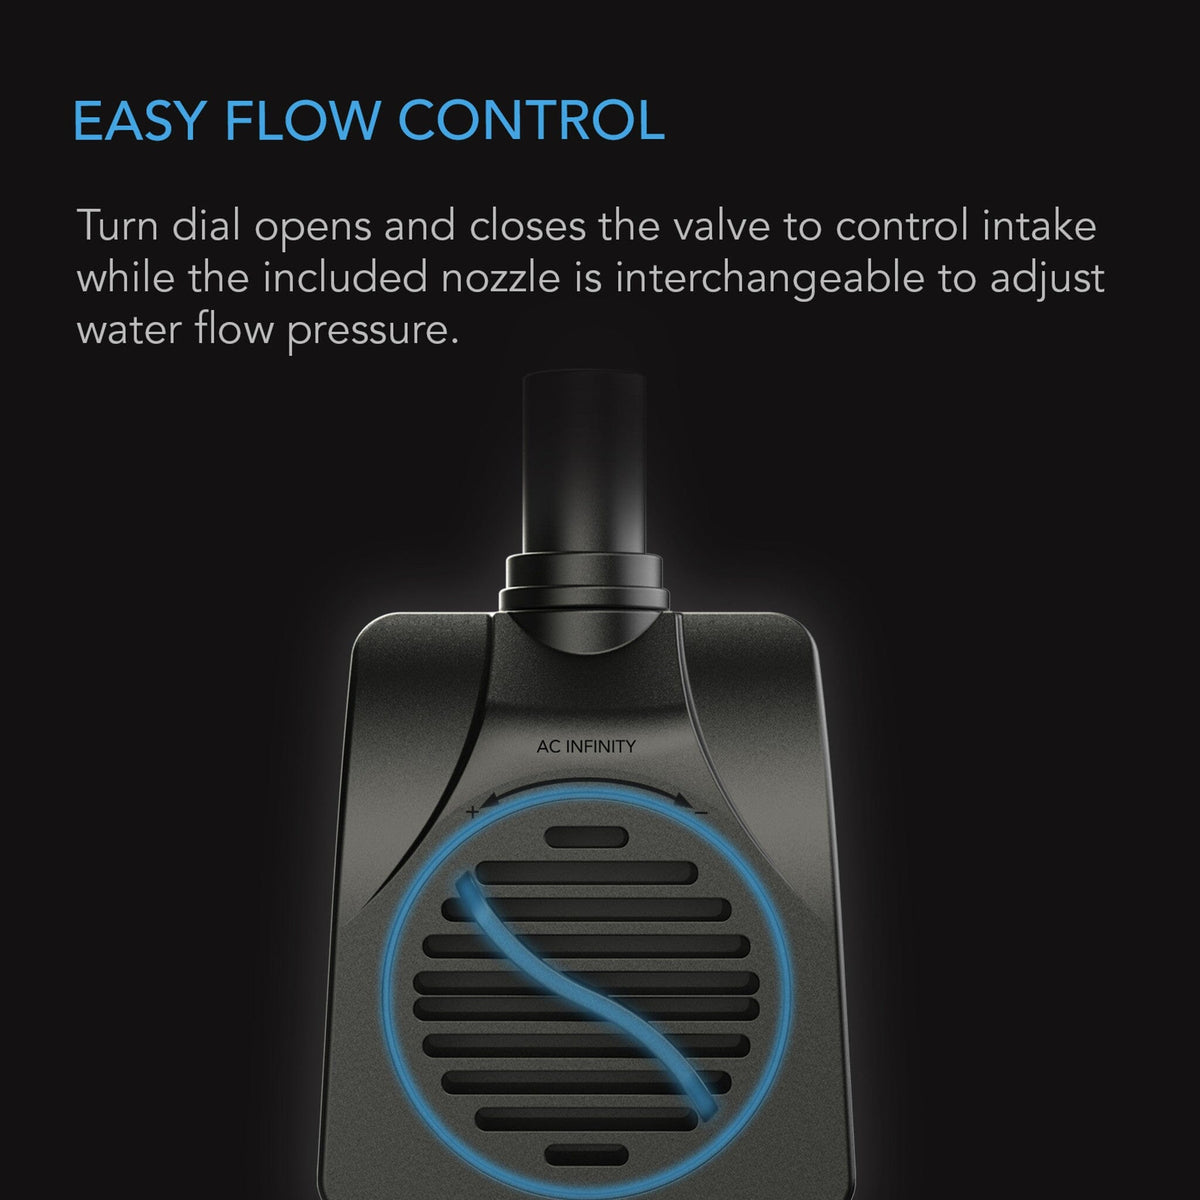 Easy flow control